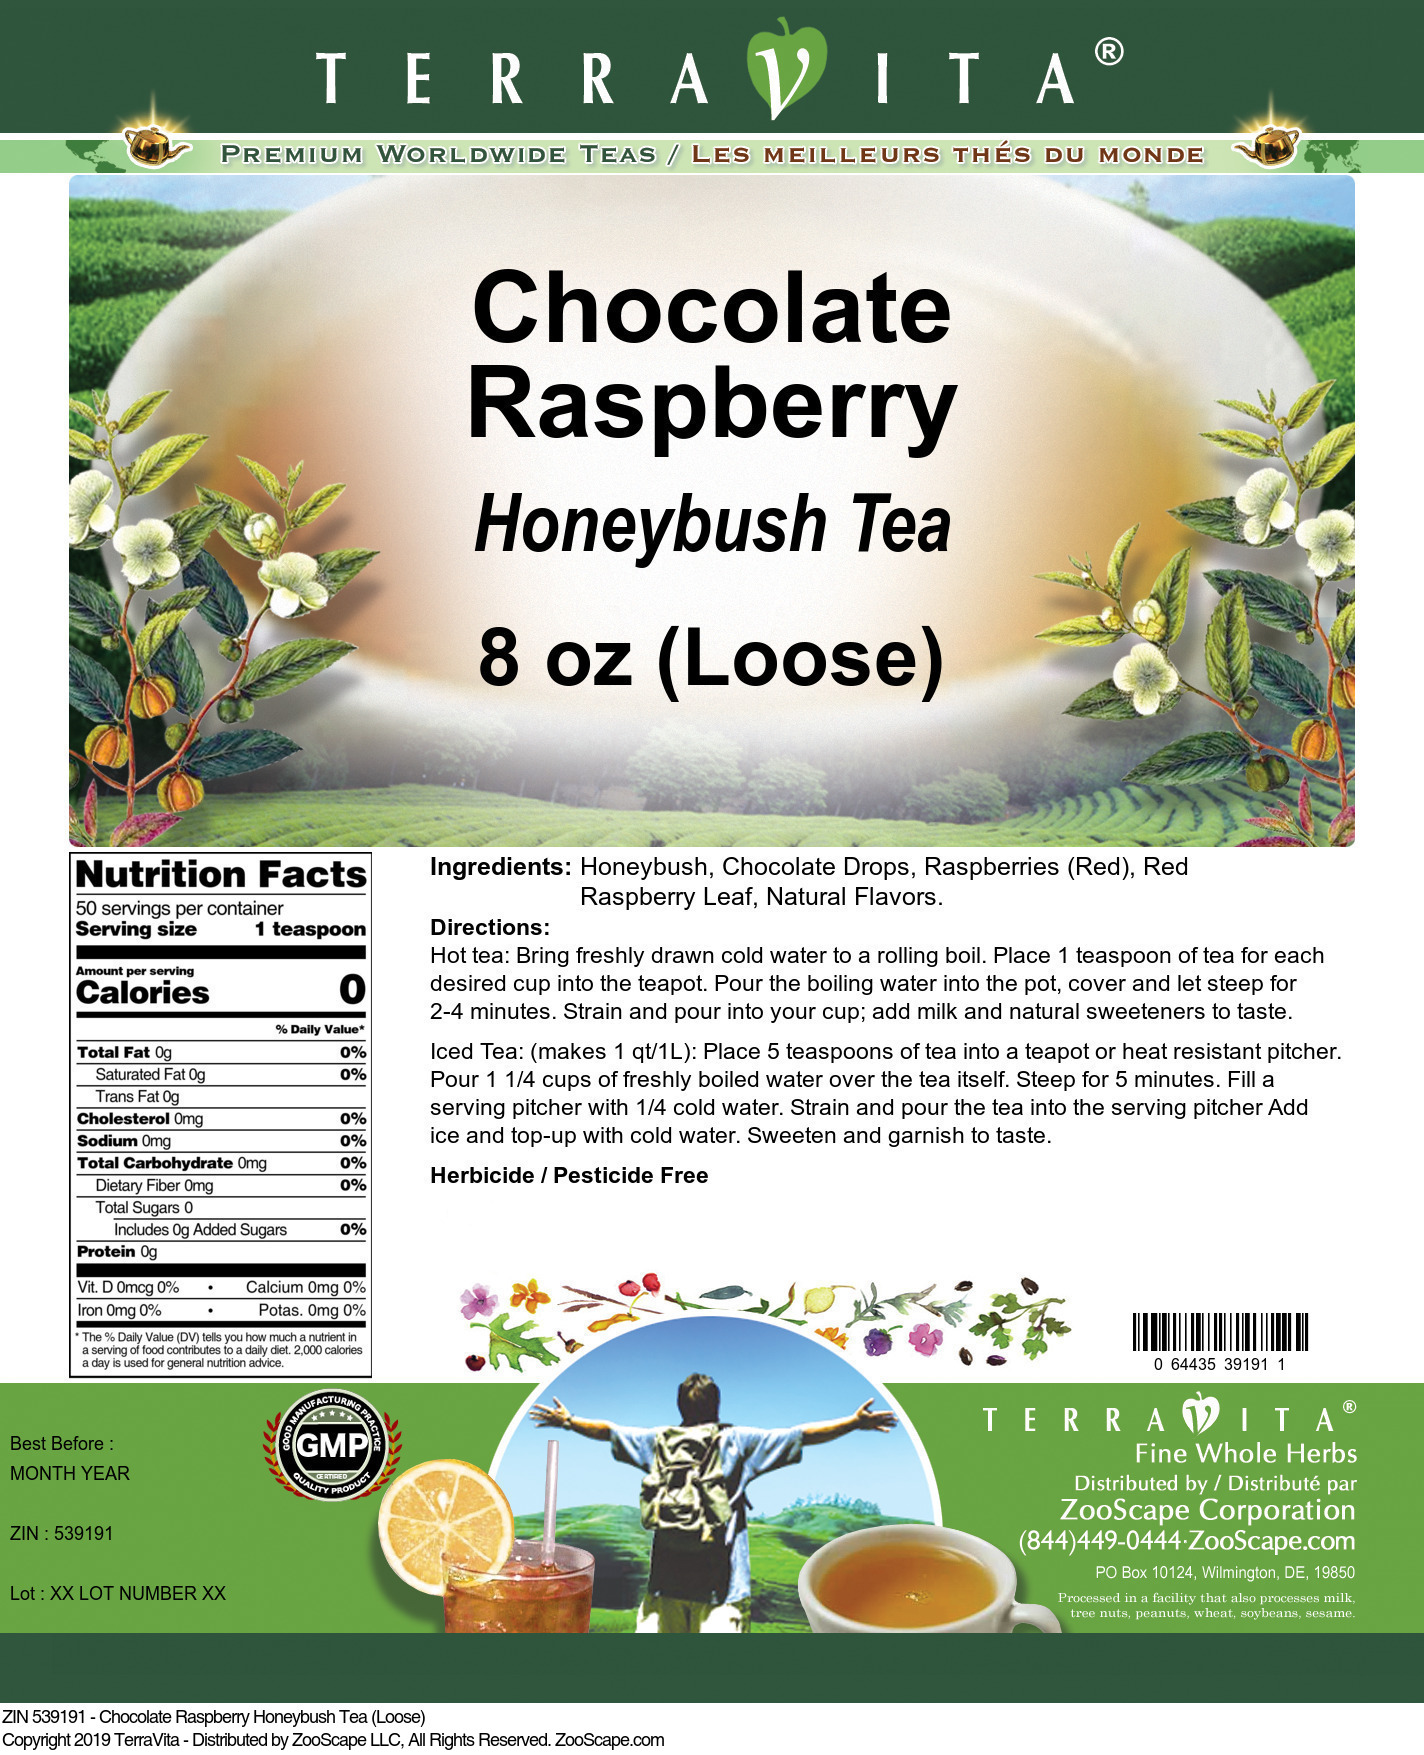 Chocolate Raspberry Honeybush Tea (Loose) - Label